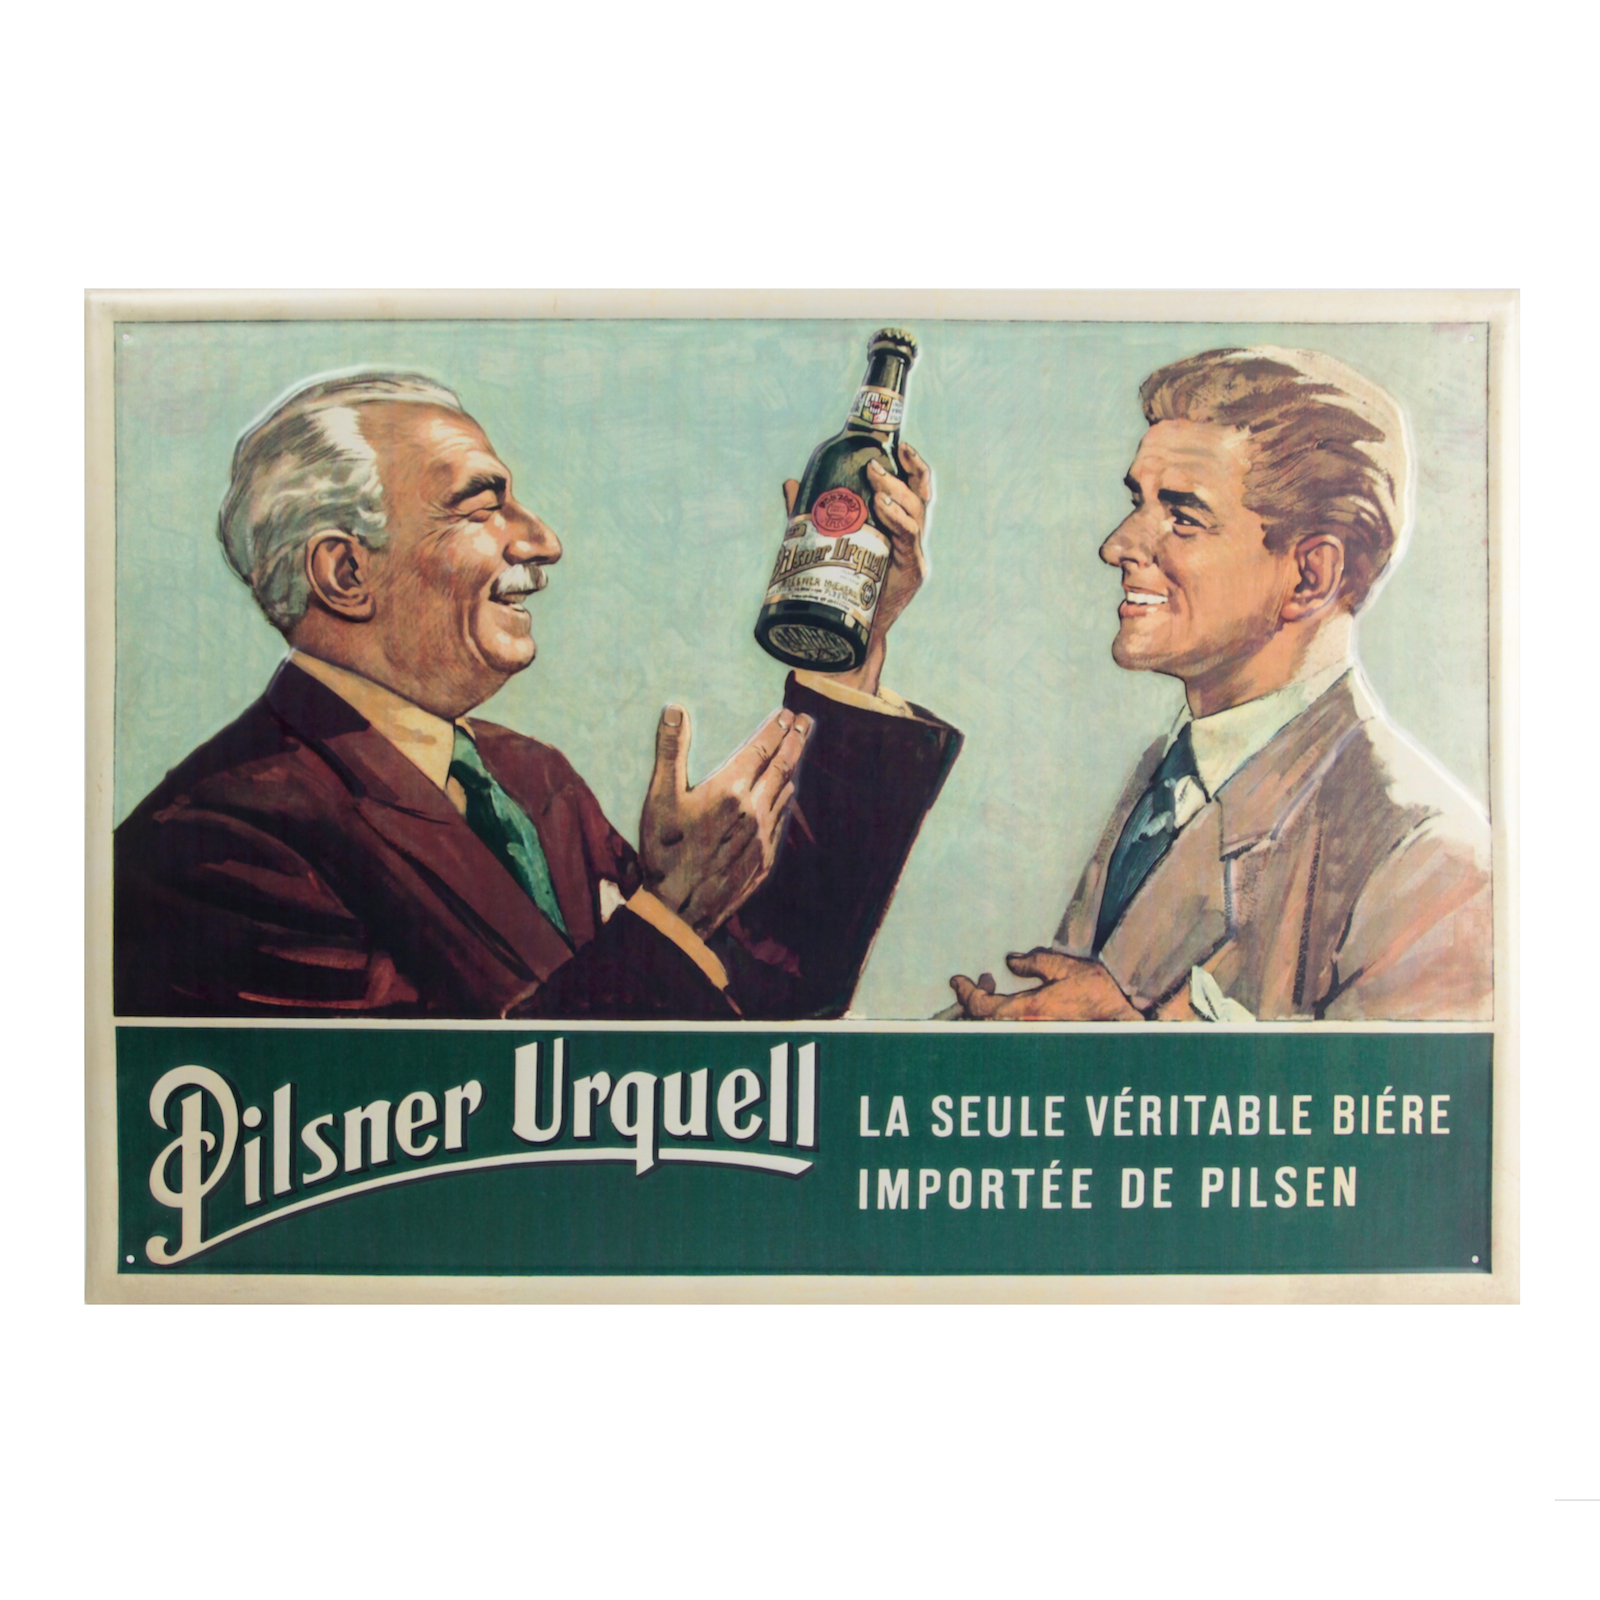 Plechová cedule s dobovou reklamou Pilsner Urquell